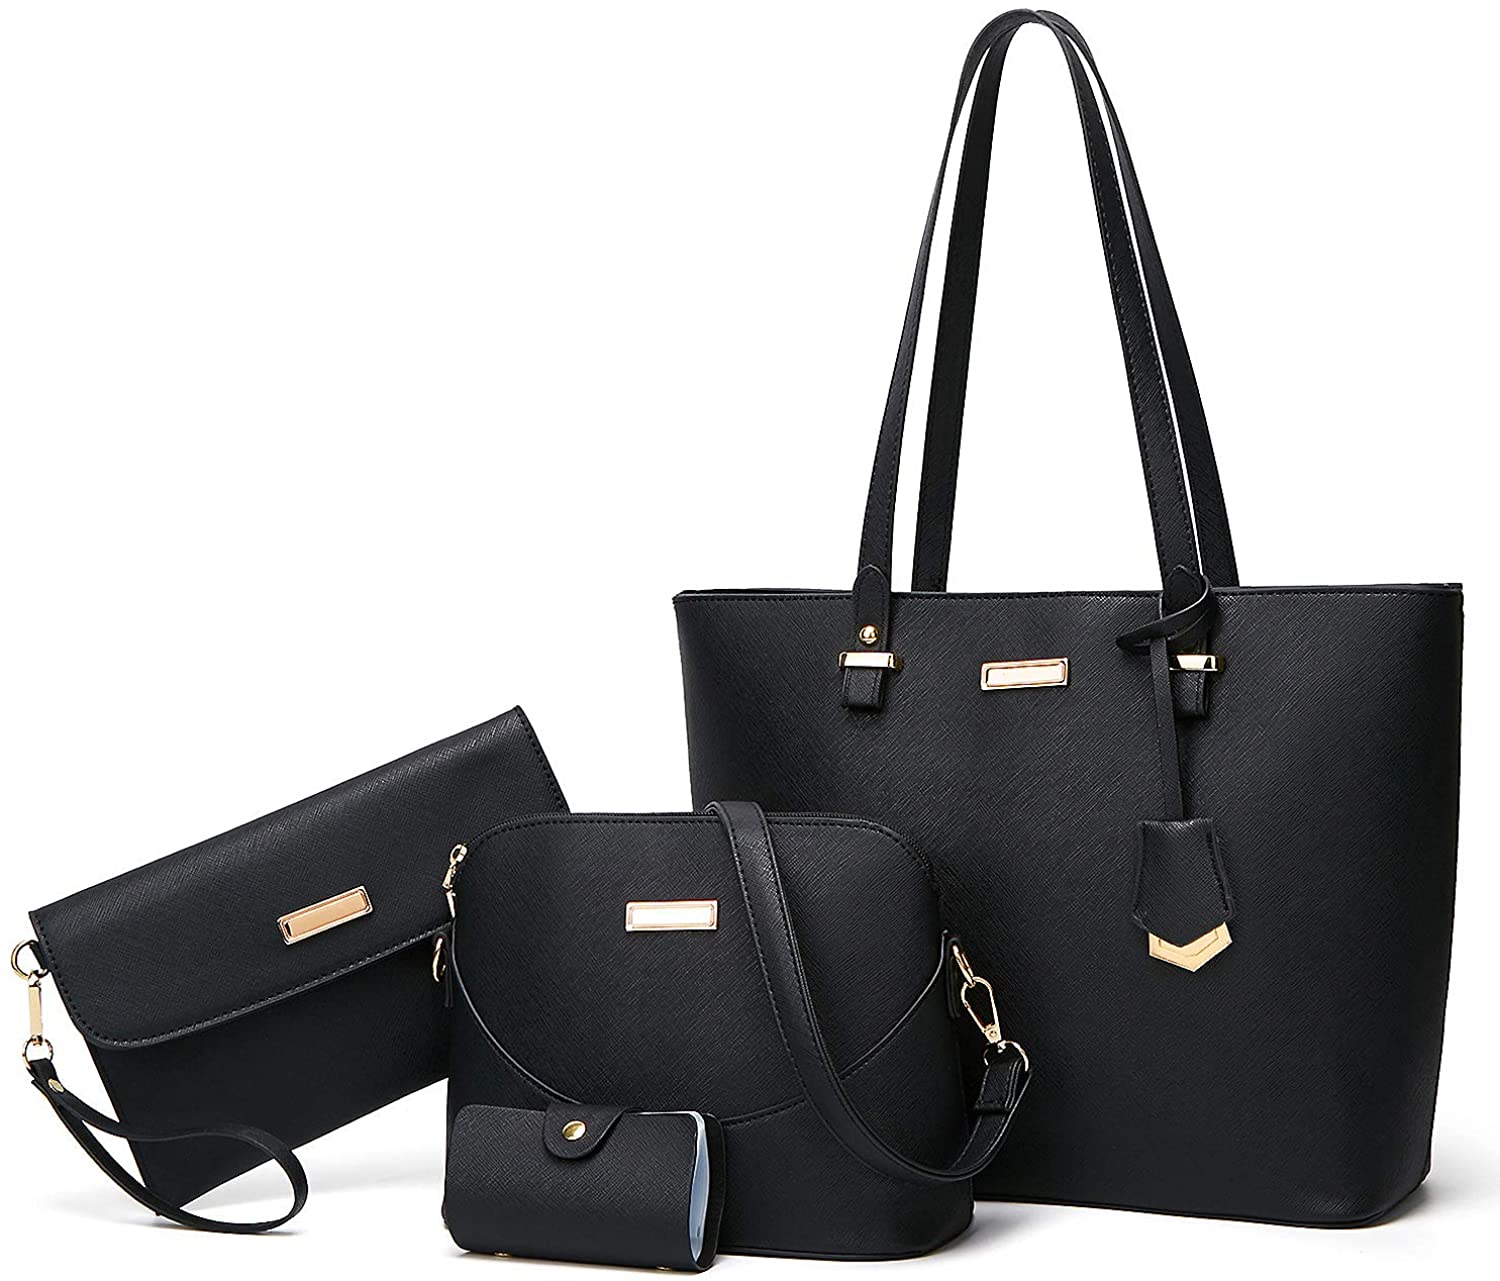 TcIFE Purses for Women Handbags Satchel Shoulder Tote Bags 